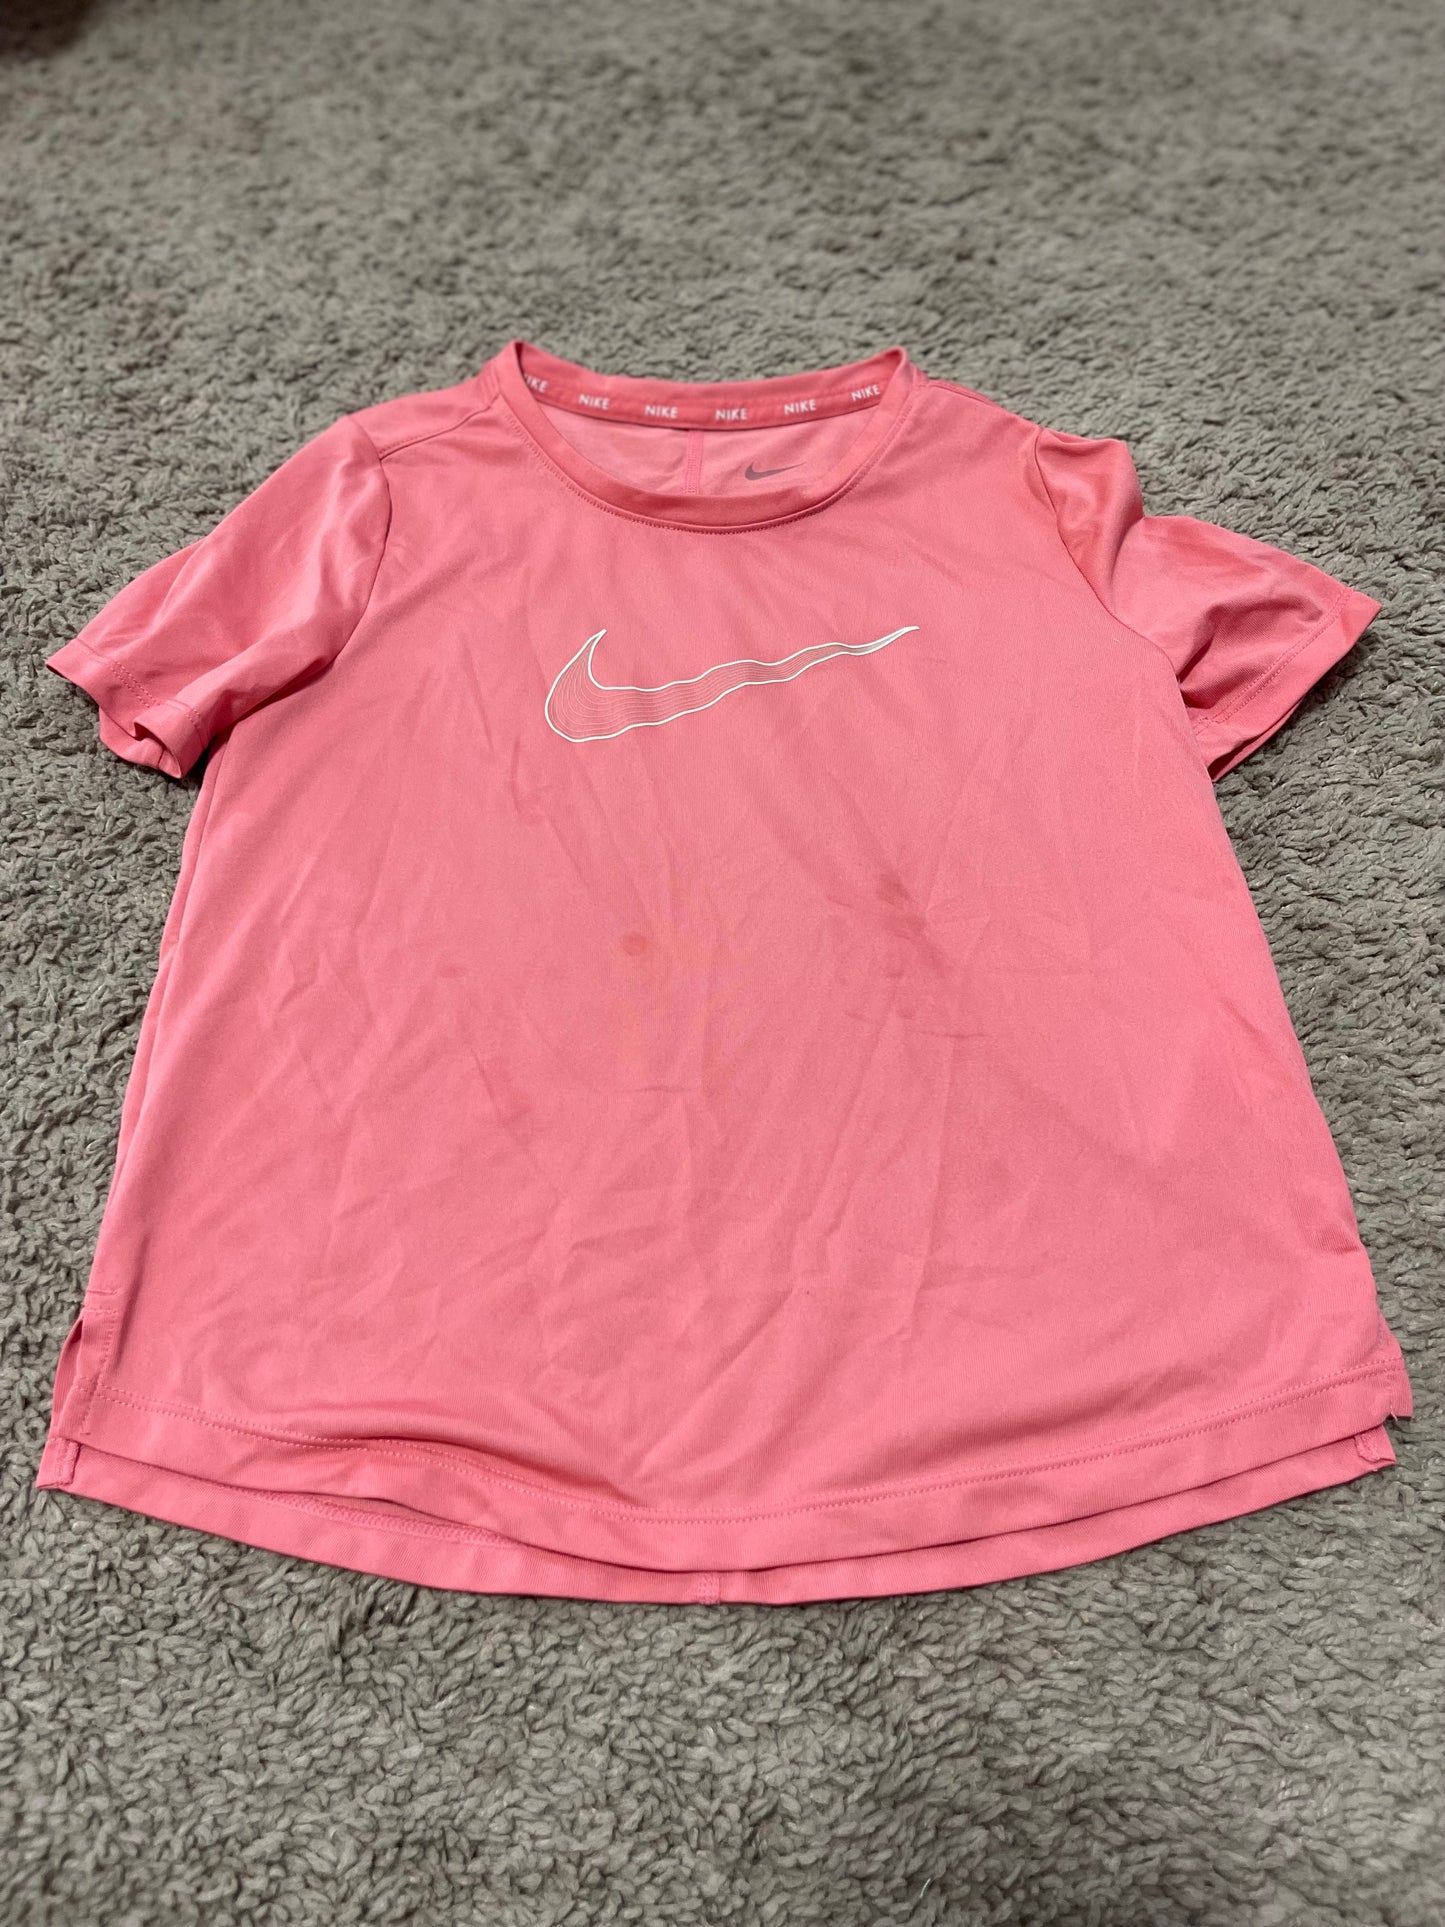 Girls XS Nike Dri-Fit Short Sleeve Shirt - PLAY CONDITION